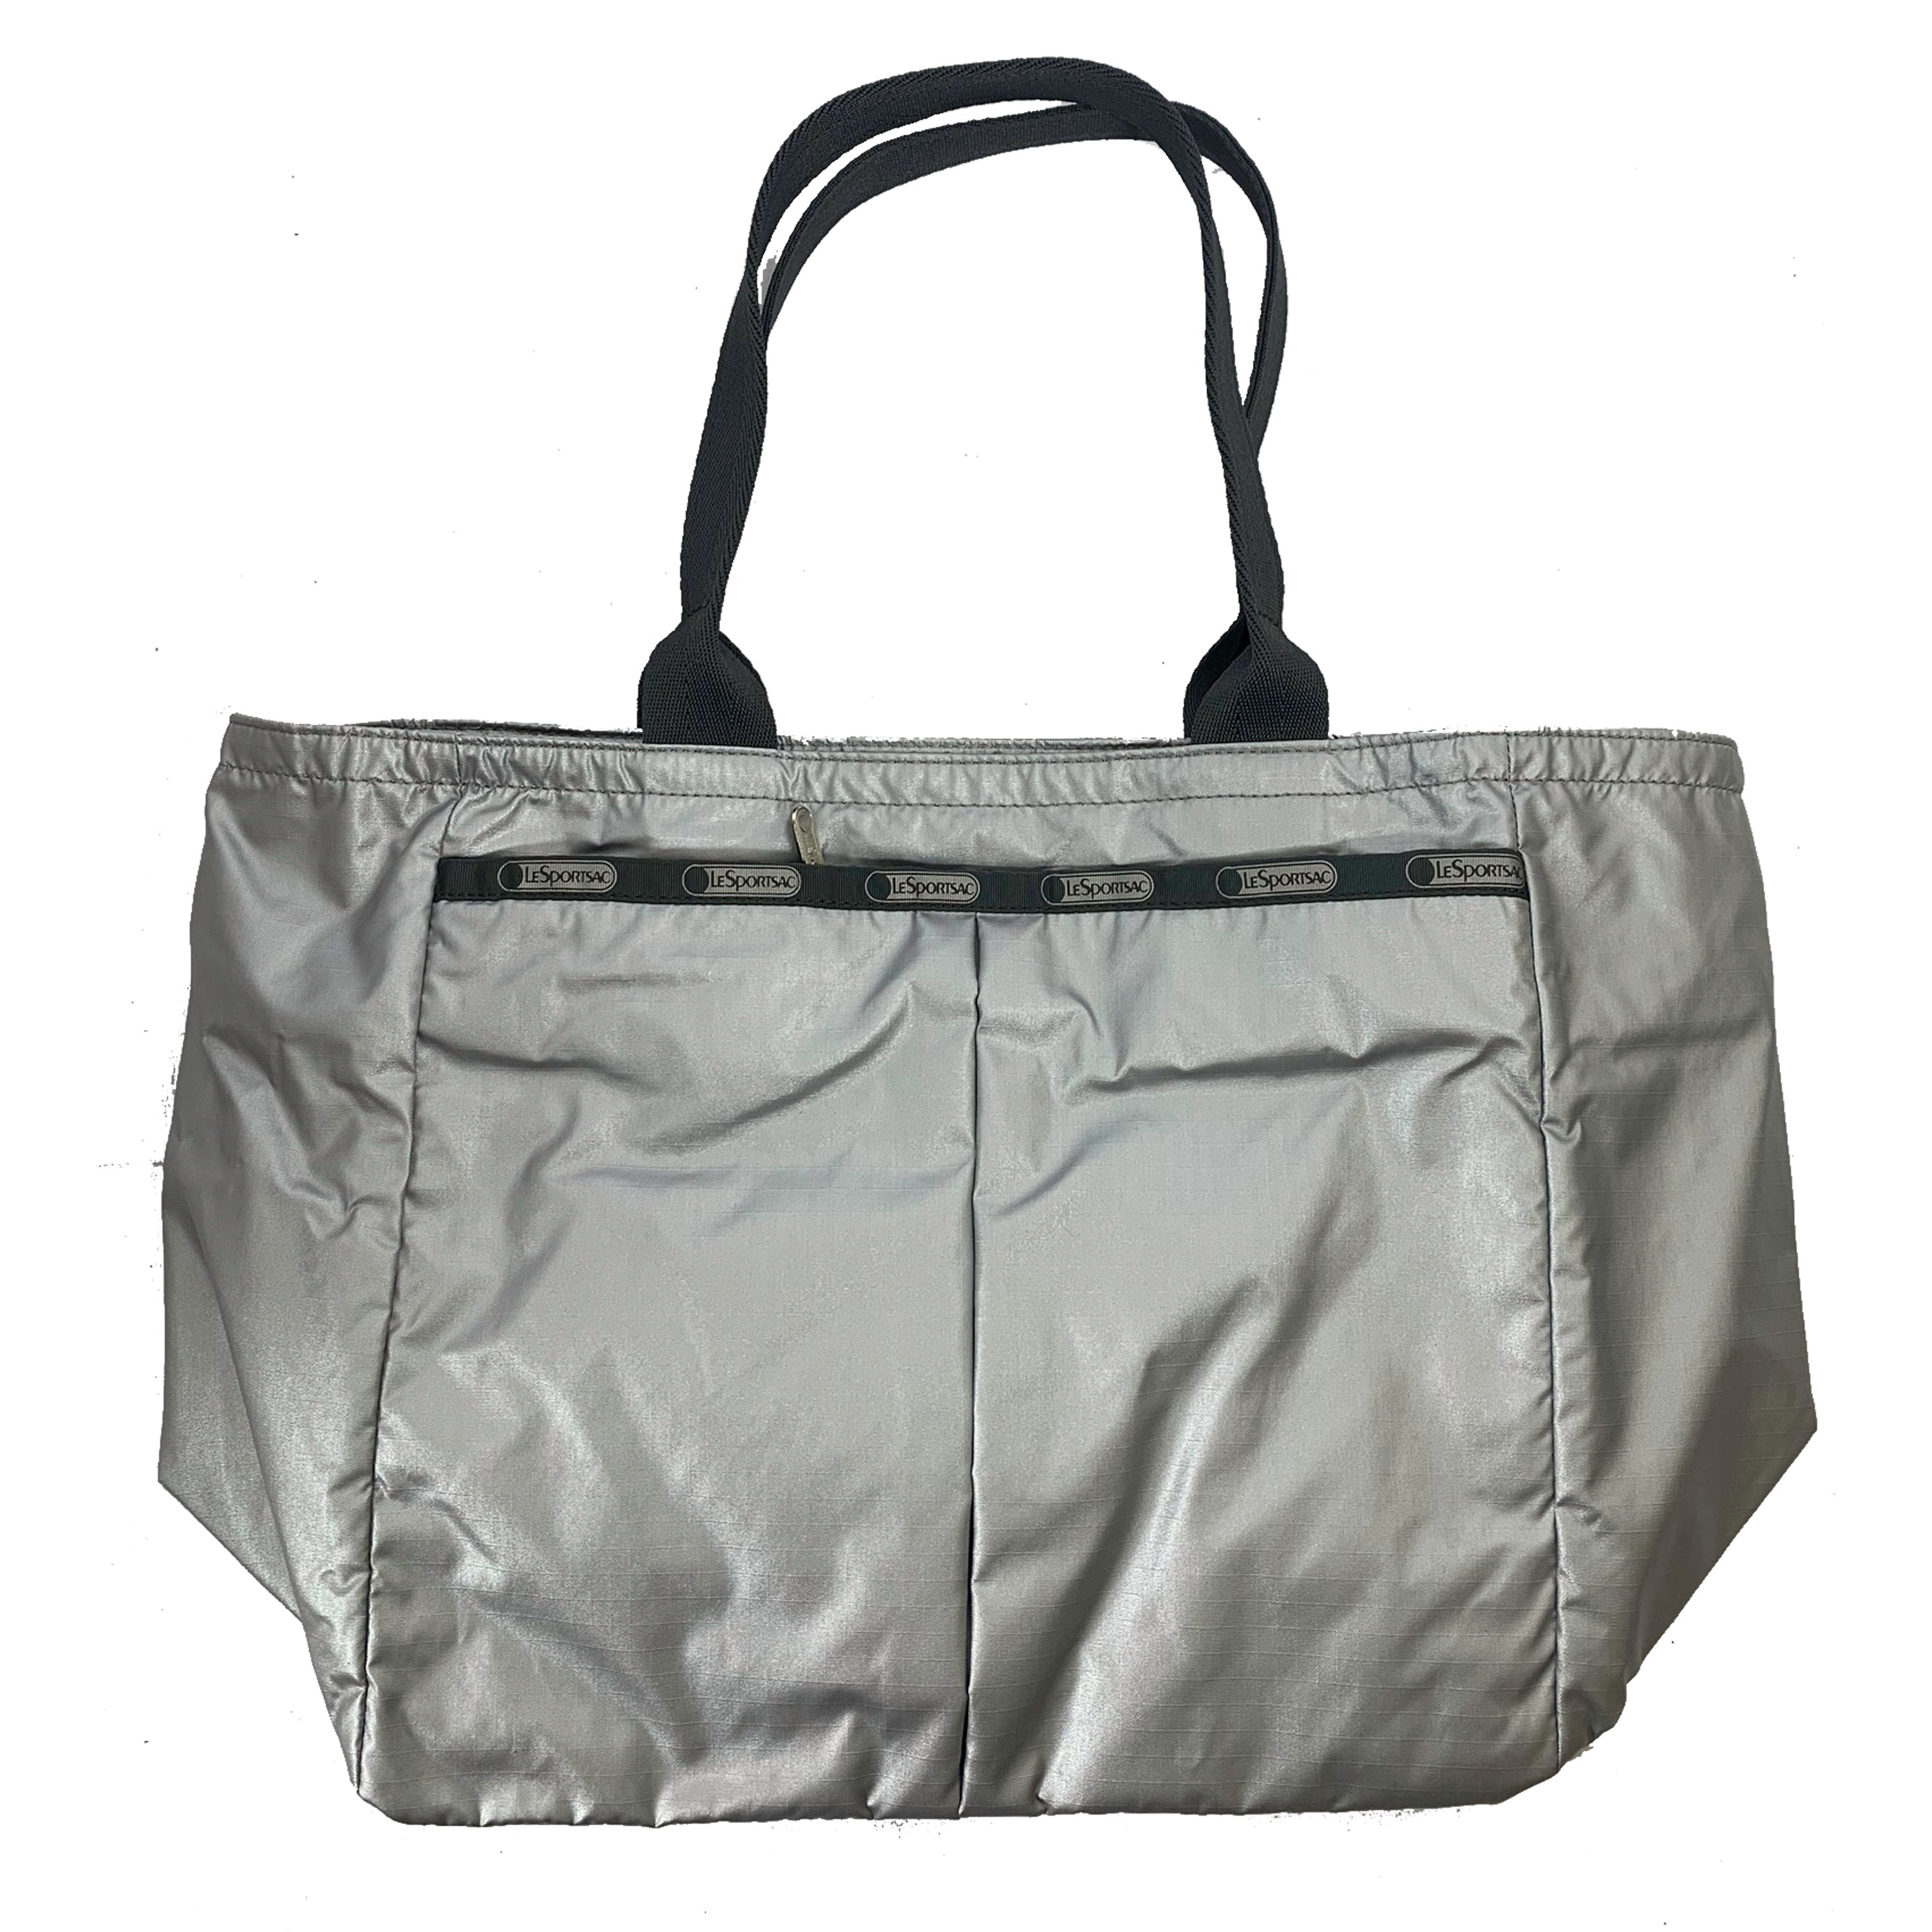 Lesportsac Everygirl Handbag Tote Bag - Tilly